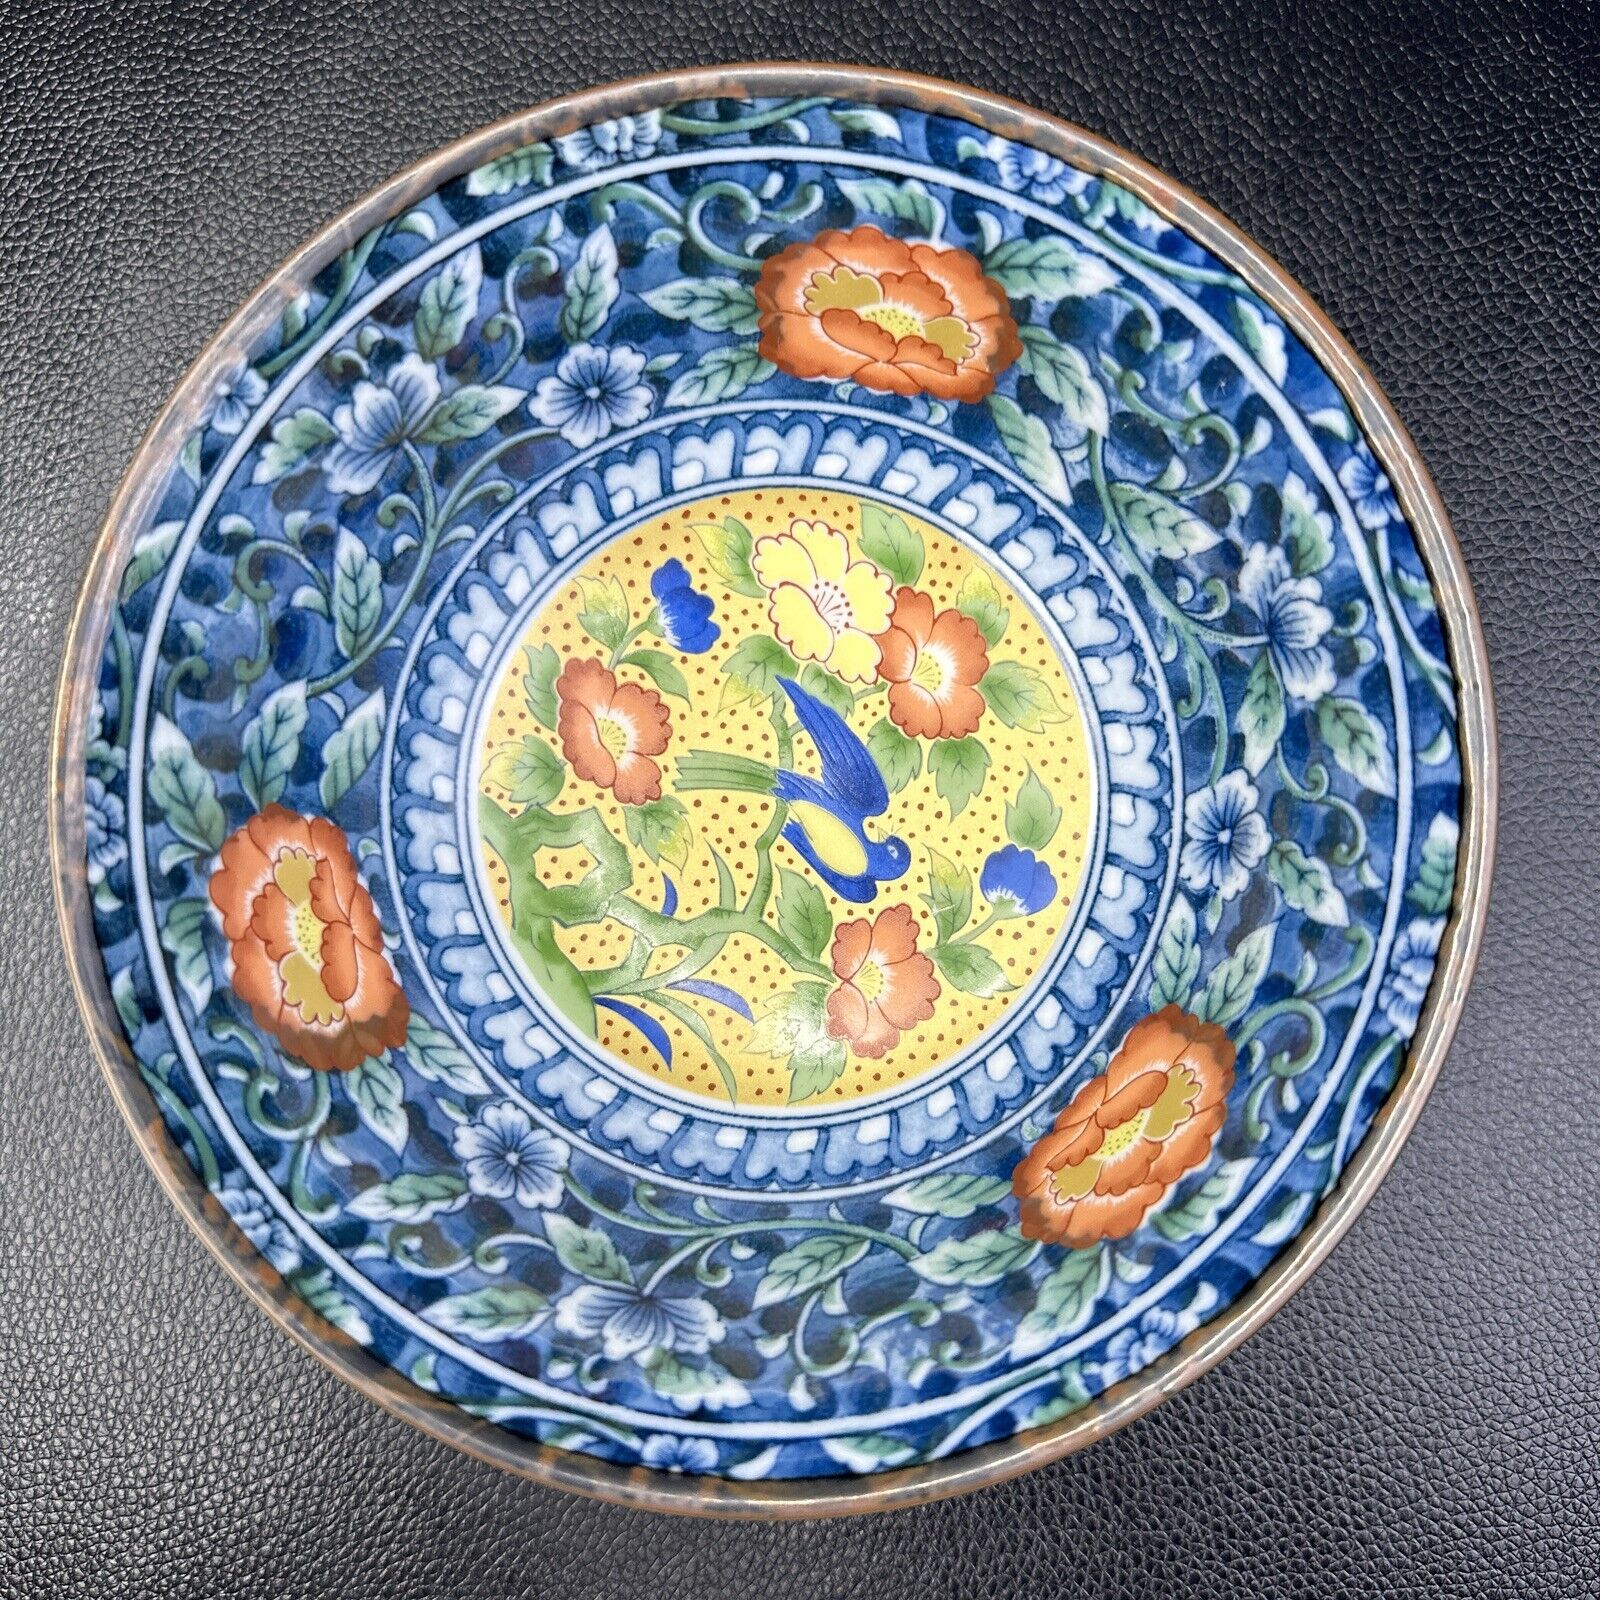 2 Vintage Juzan Gama Japanese Kutani Porcelain Bowls Blue Bird Red Flowers 5.75”